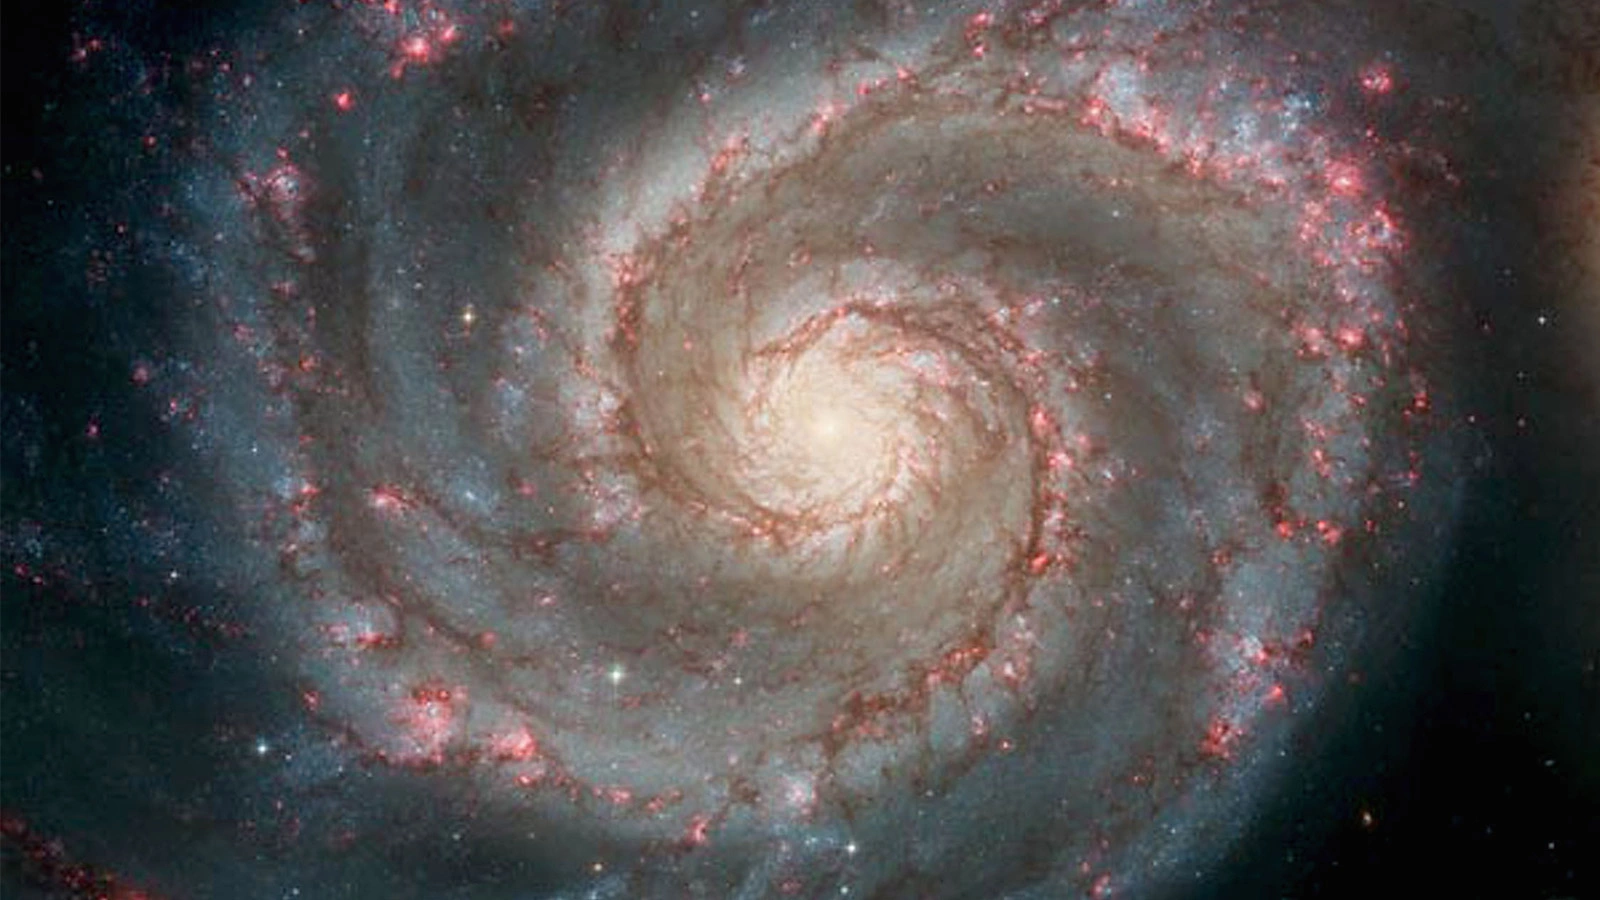 Hubble Space Telescope / Nasa via Getty Images